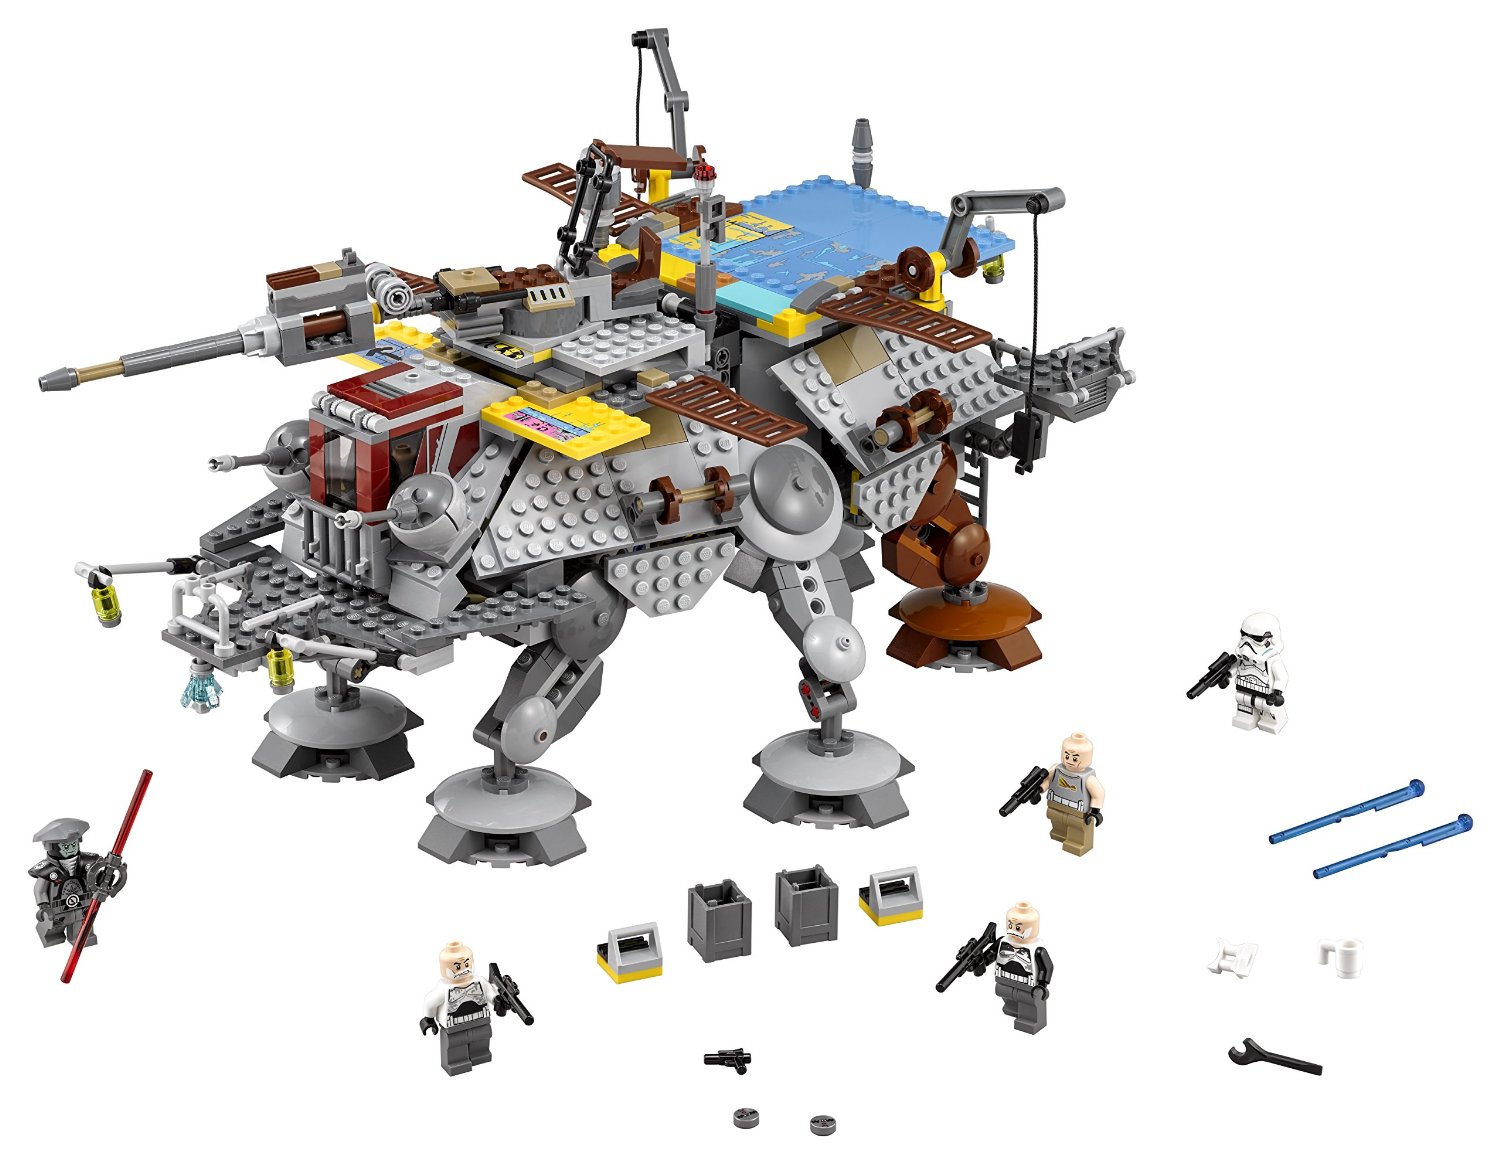 Rex's AT-TE Walker Lego Set 3